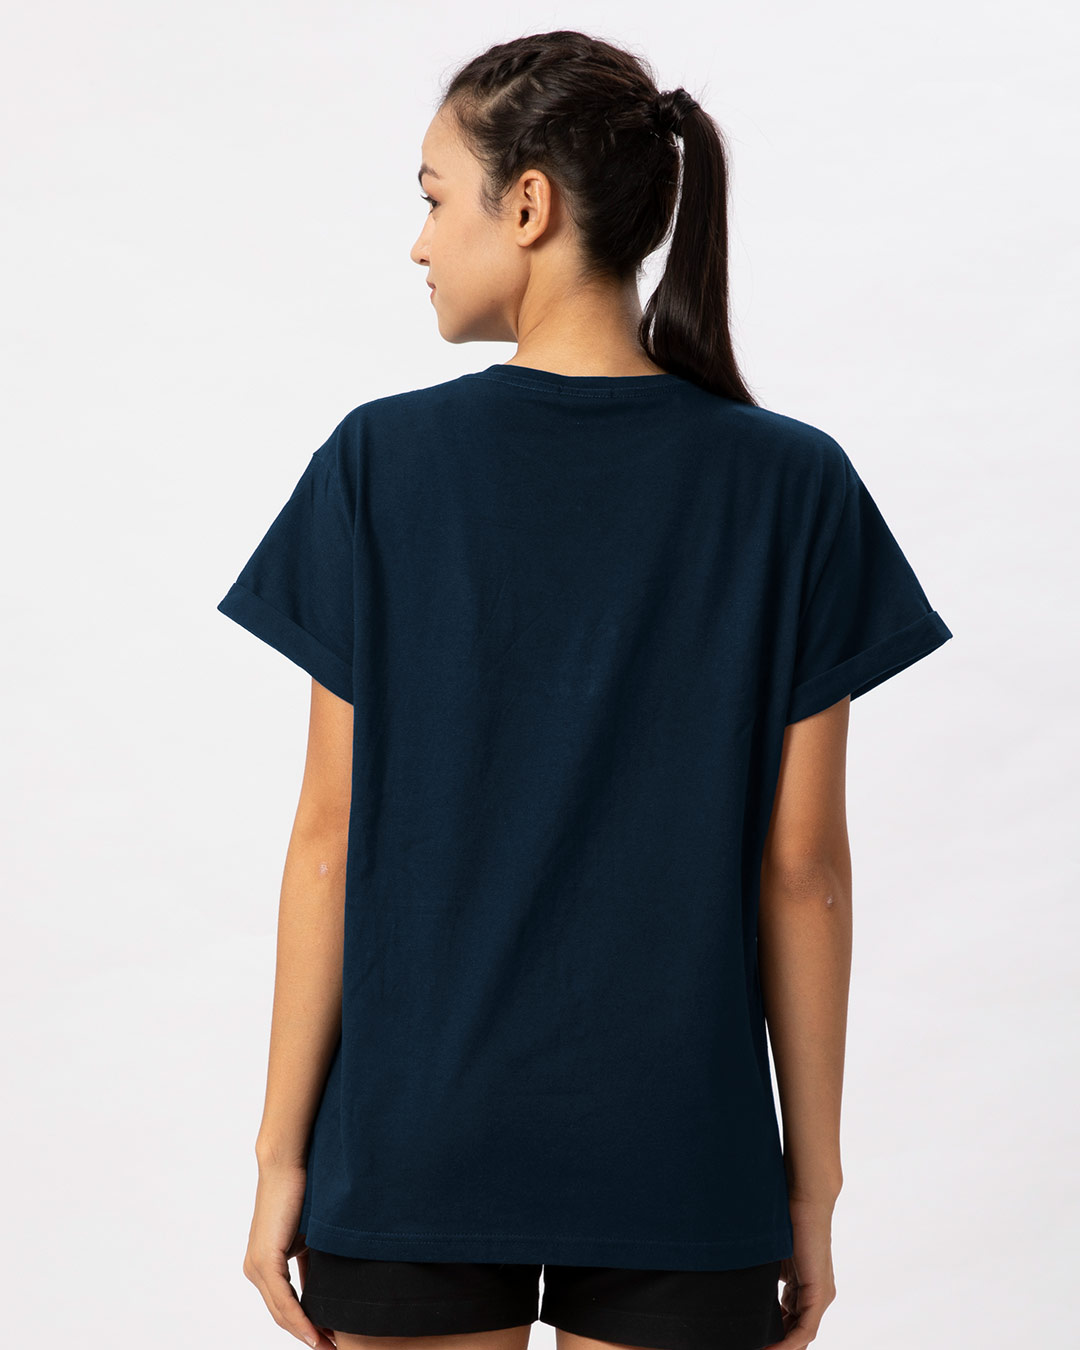 Shop Merged Mickey Glow In Dark Boyfriend T-Shirt (DL) -Back